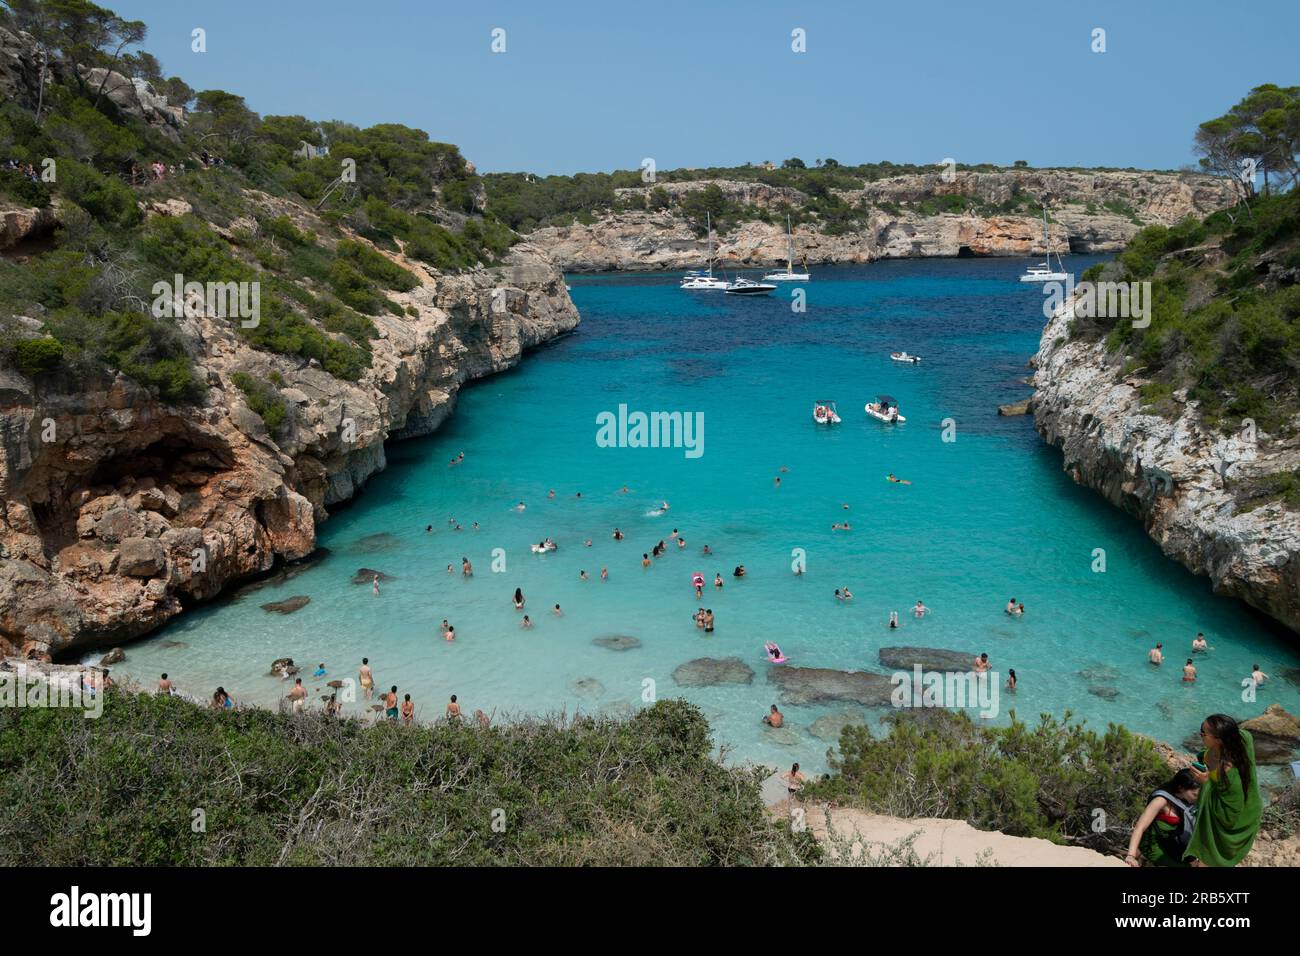 Calo Des Moro Palma de Mallorca, Caló des Moro is a “beach” in southeast Mallorca set in a deep turquoise bay, flanked by limestone cliffs. Stock Photo